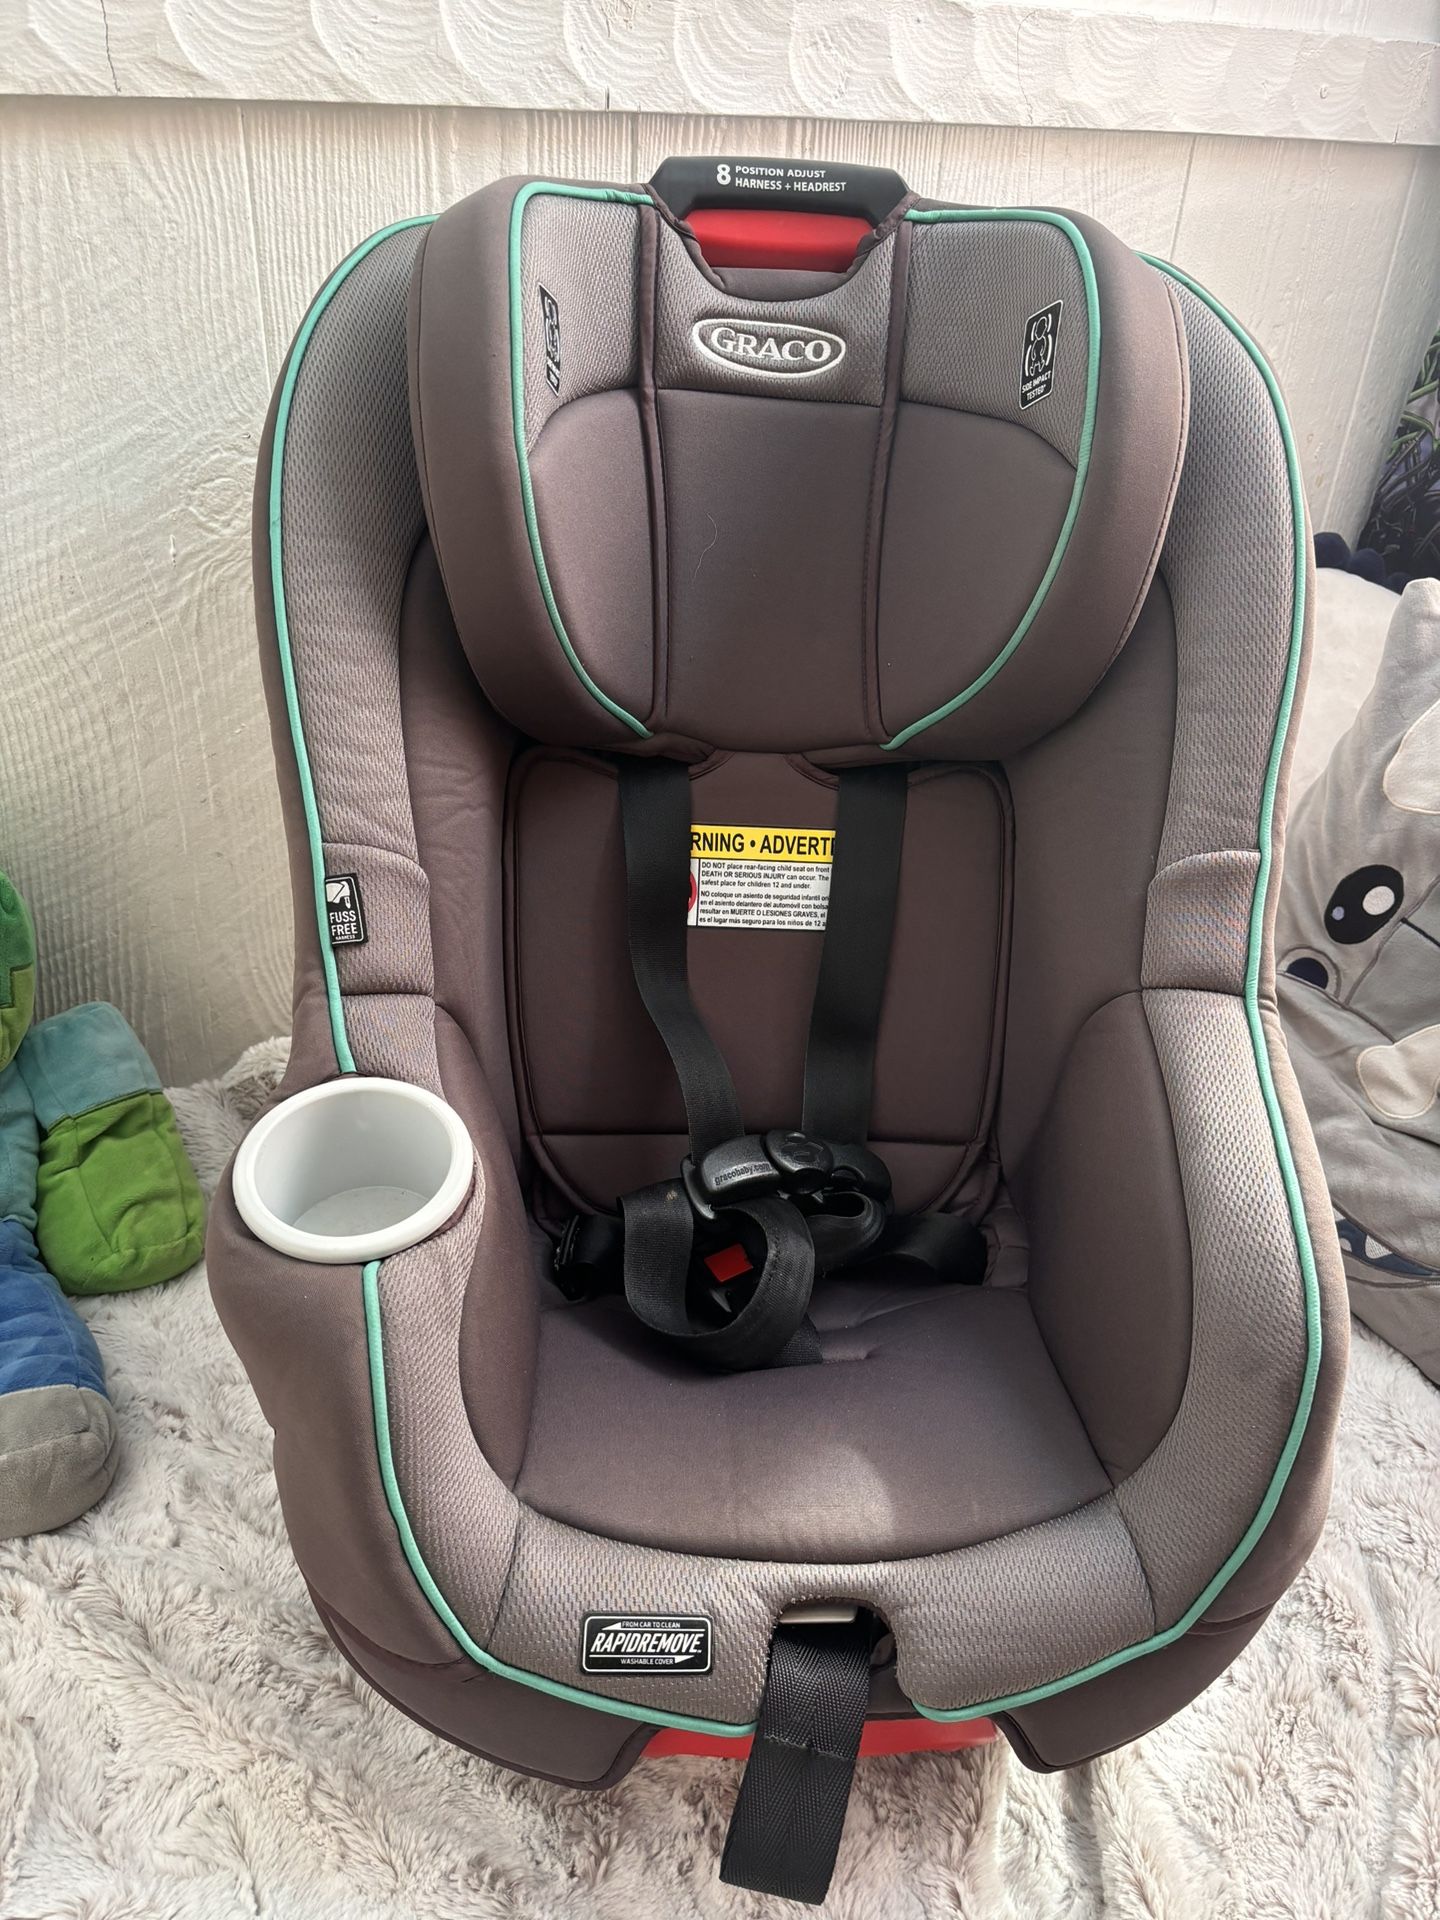 Child's car seat